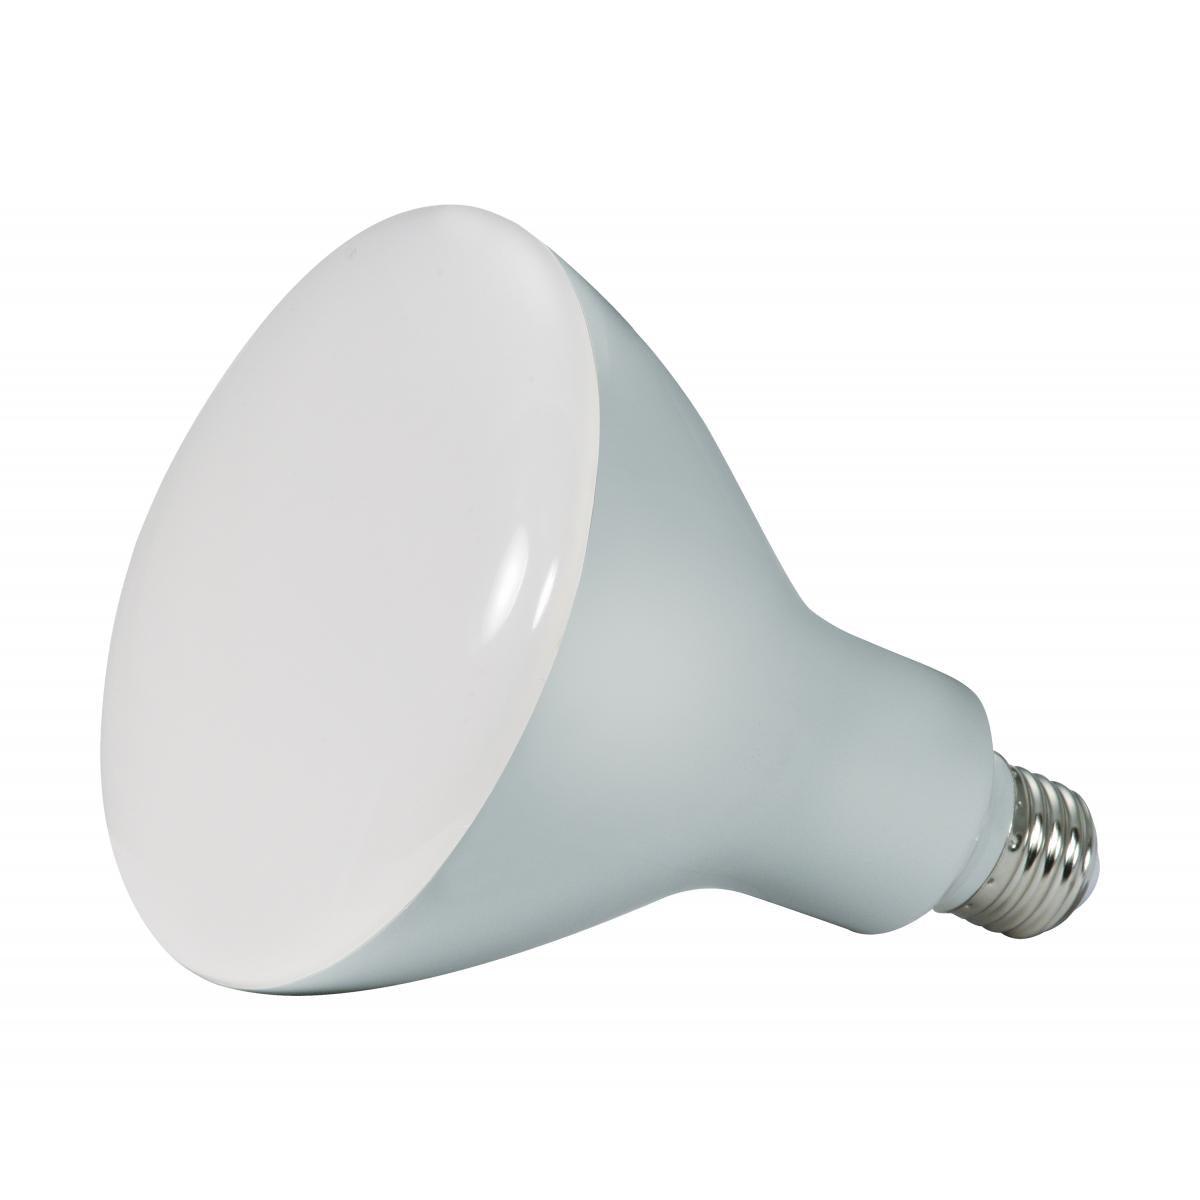 LED R40/BR40 Reflector bulb, 13 watt, 1075 Lumens, 5000K, E26 Medium Base, 103 Deg. Flood